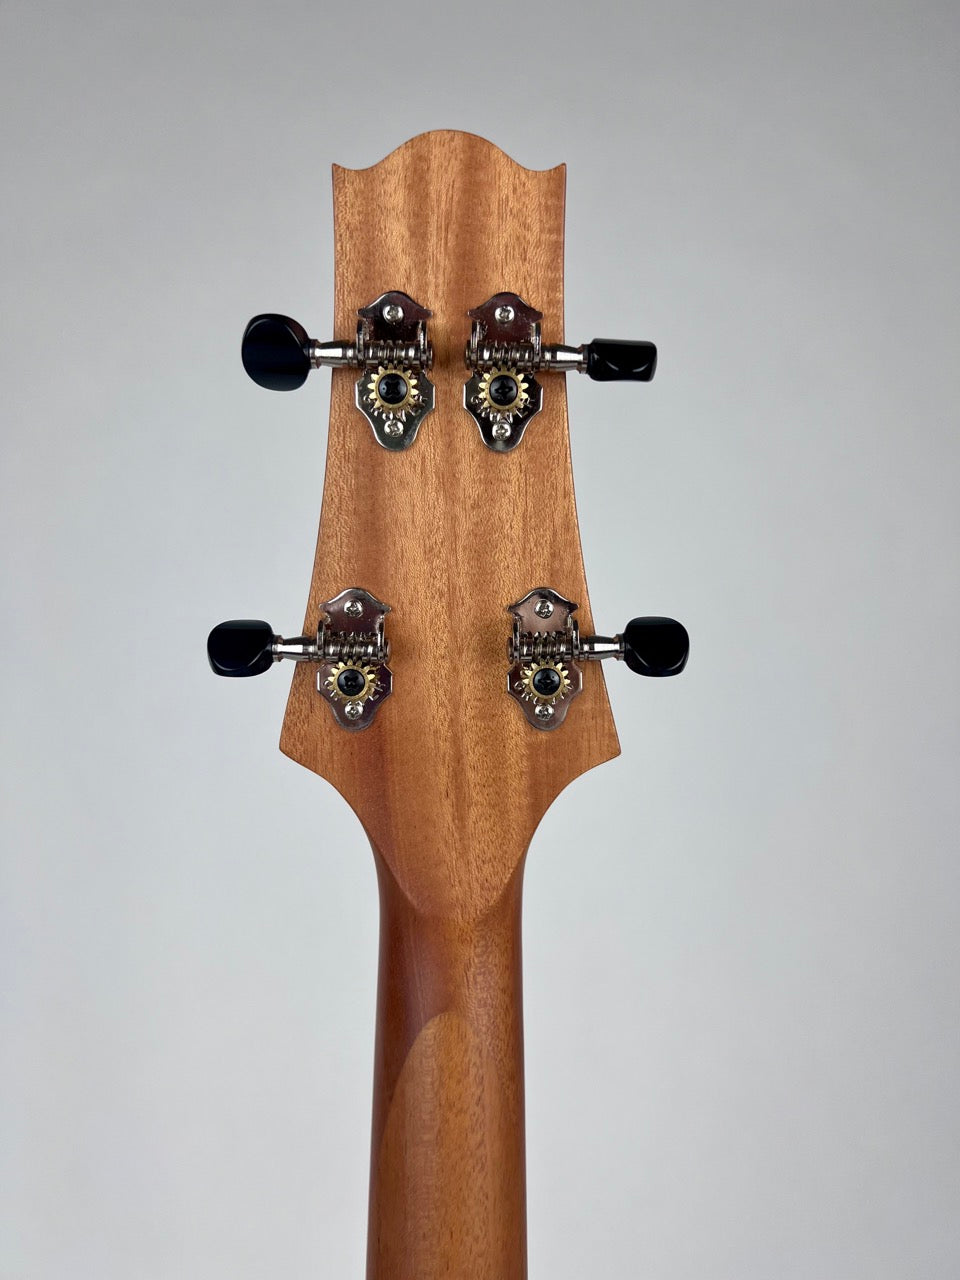 KR Strings Octolindo Artist Series Tenor Guitar